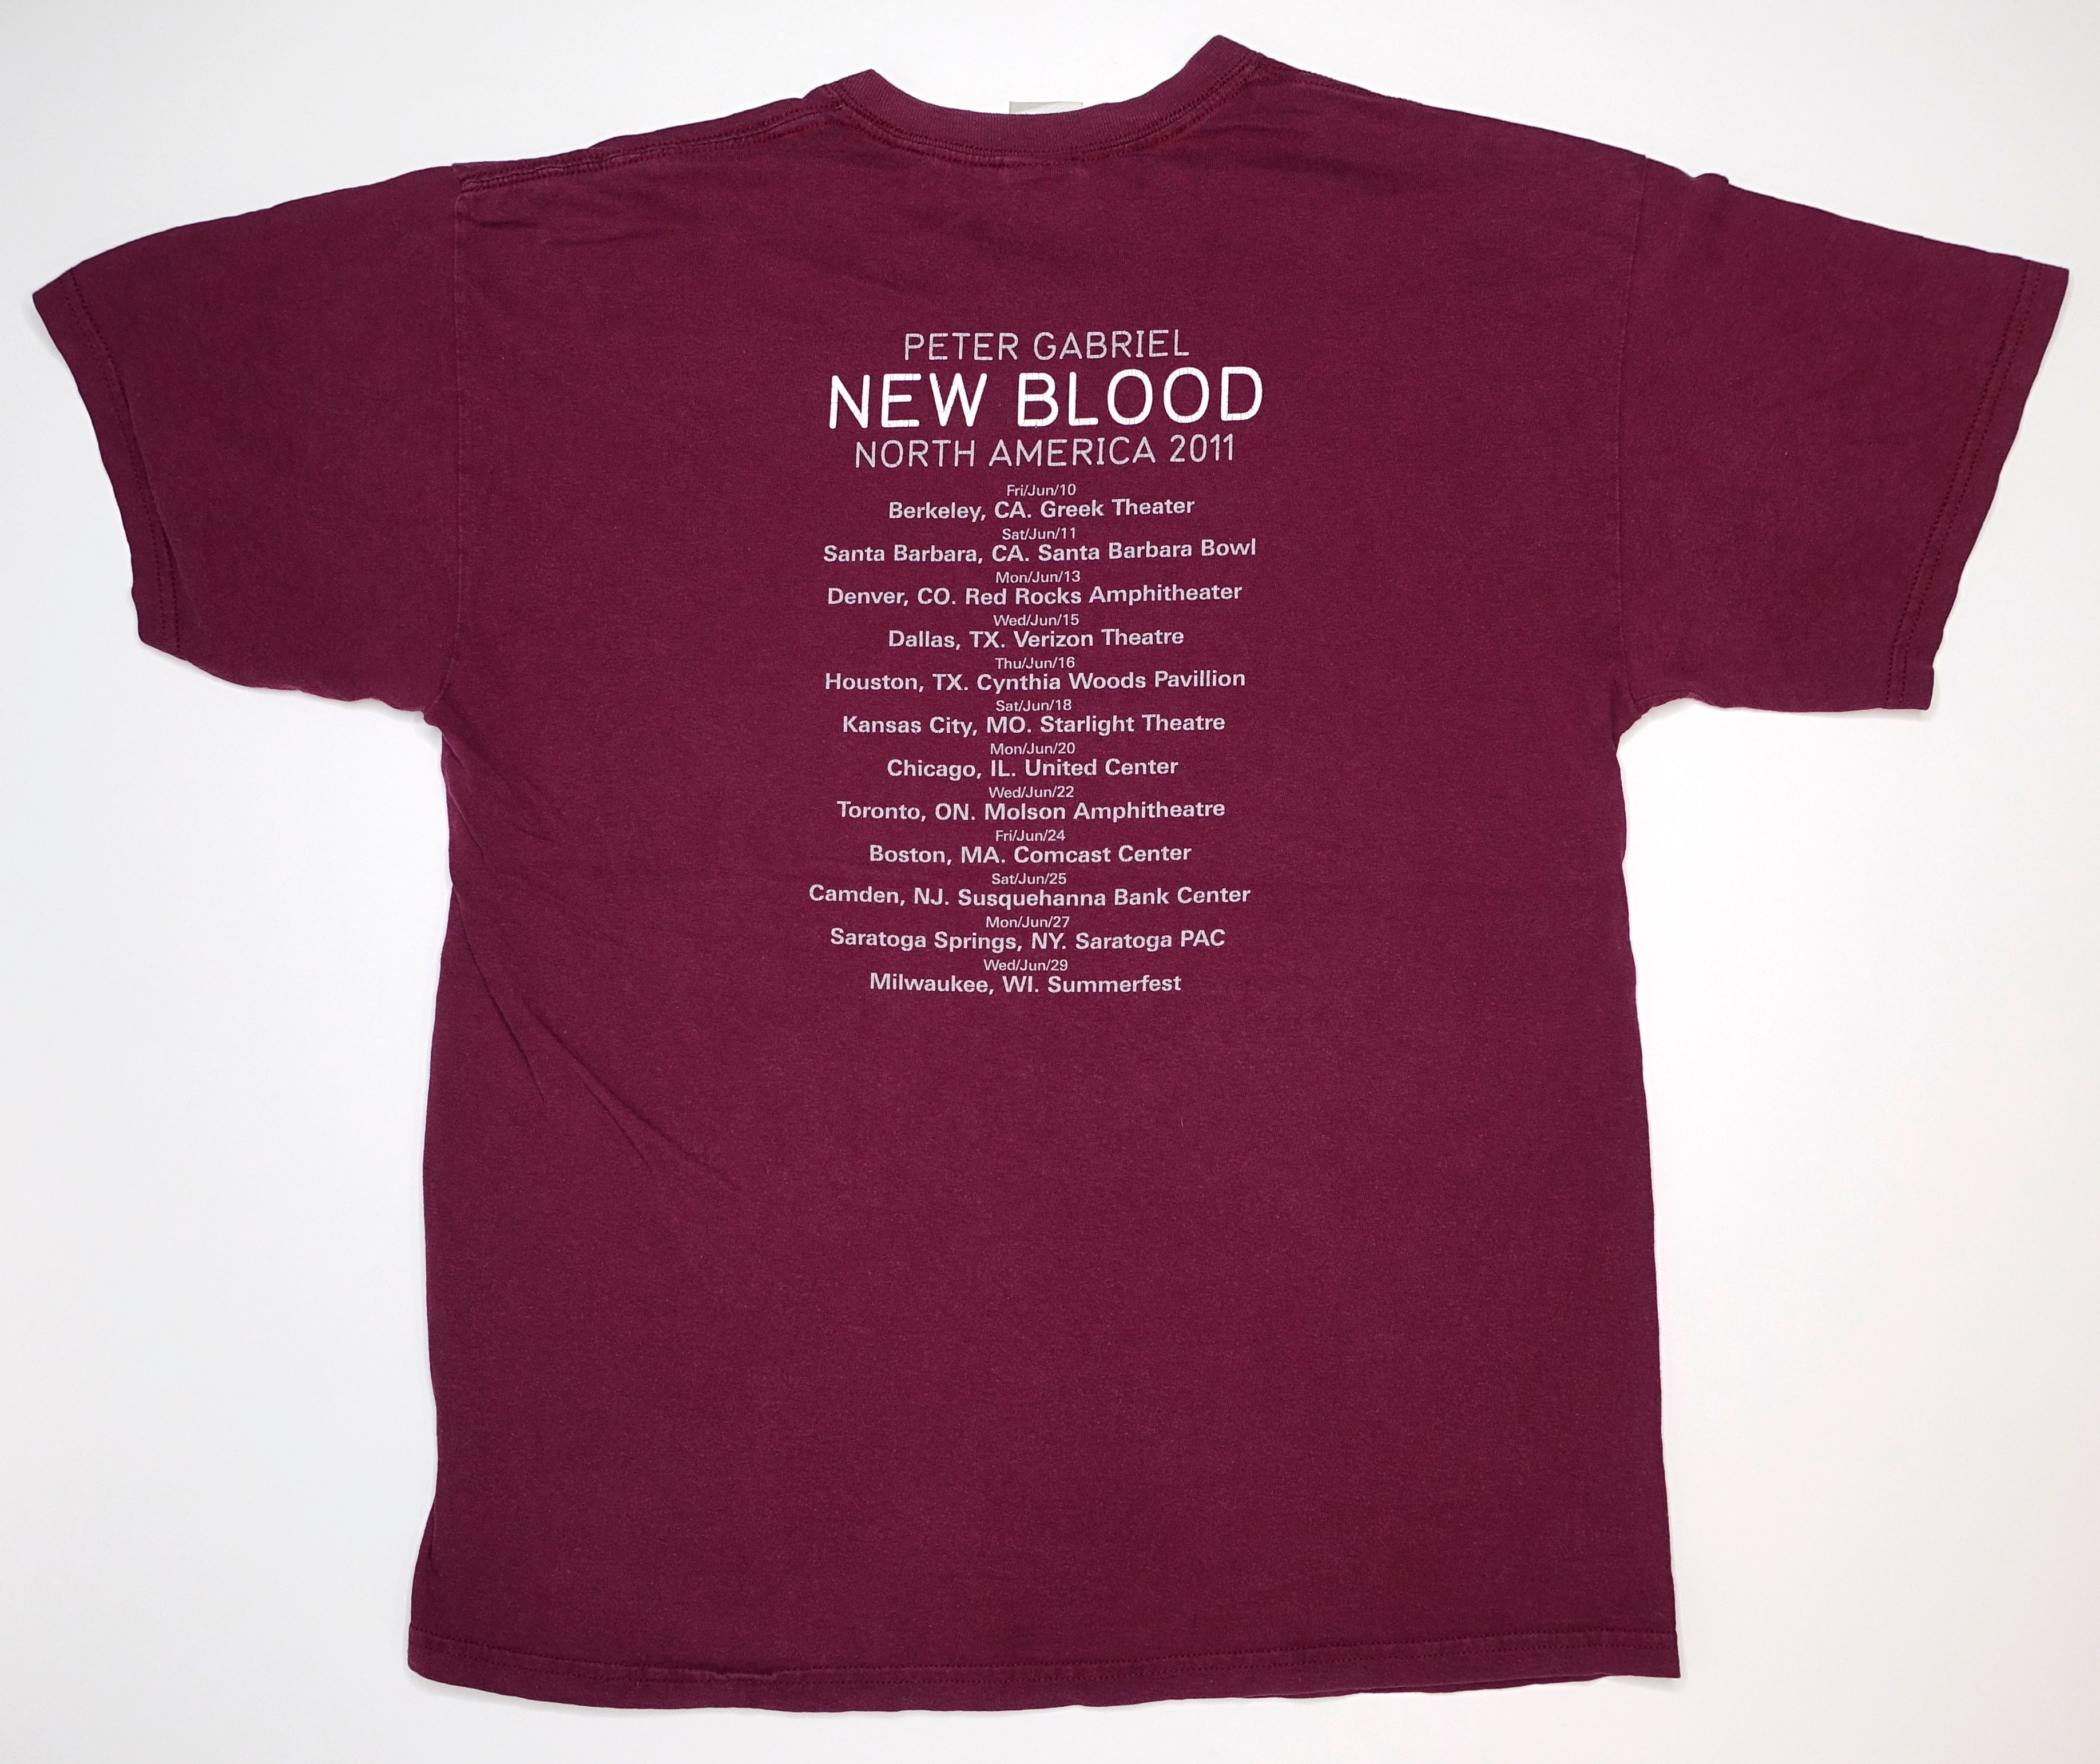 Peter Gabriel - New Blood North America 2011 Tour Shirt Size Large